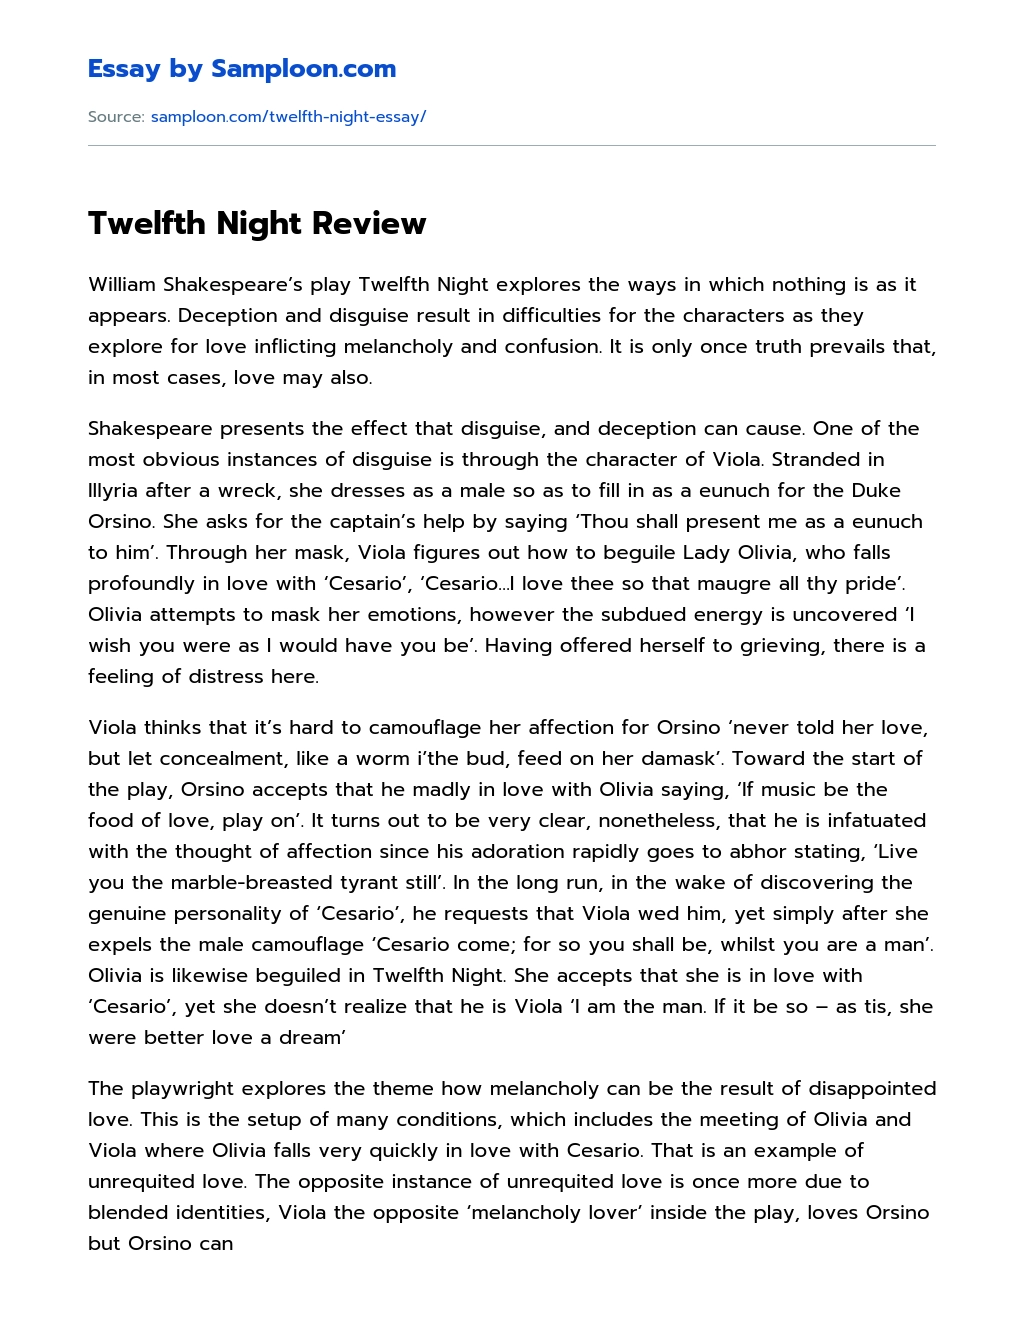 Twelfth Night Review essay